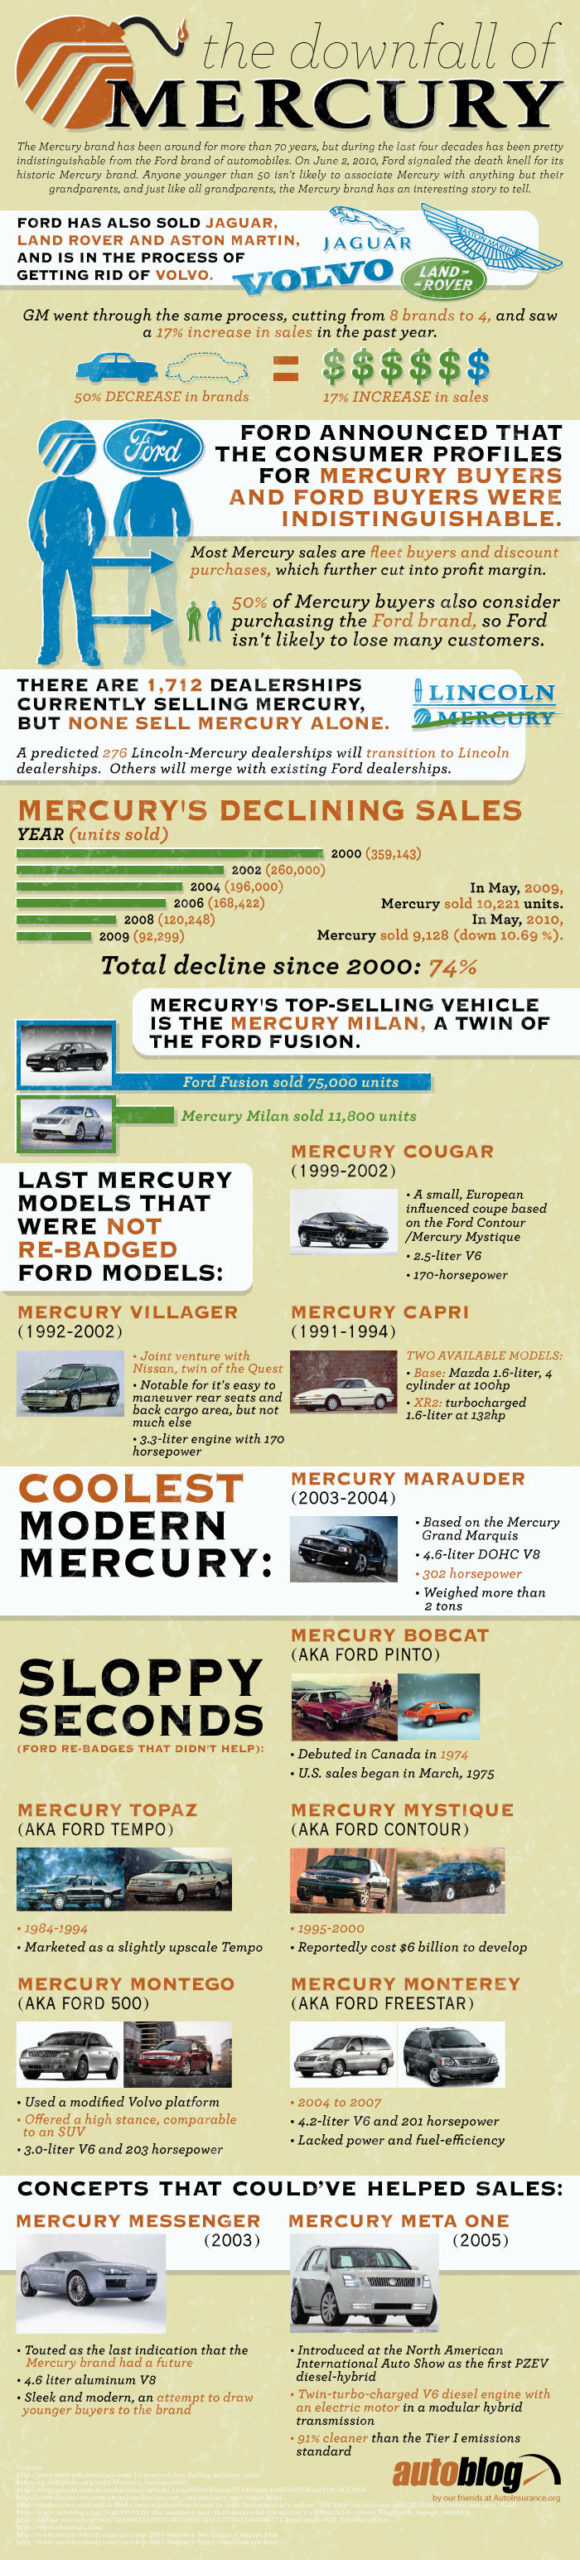 the downfall of mercury cars